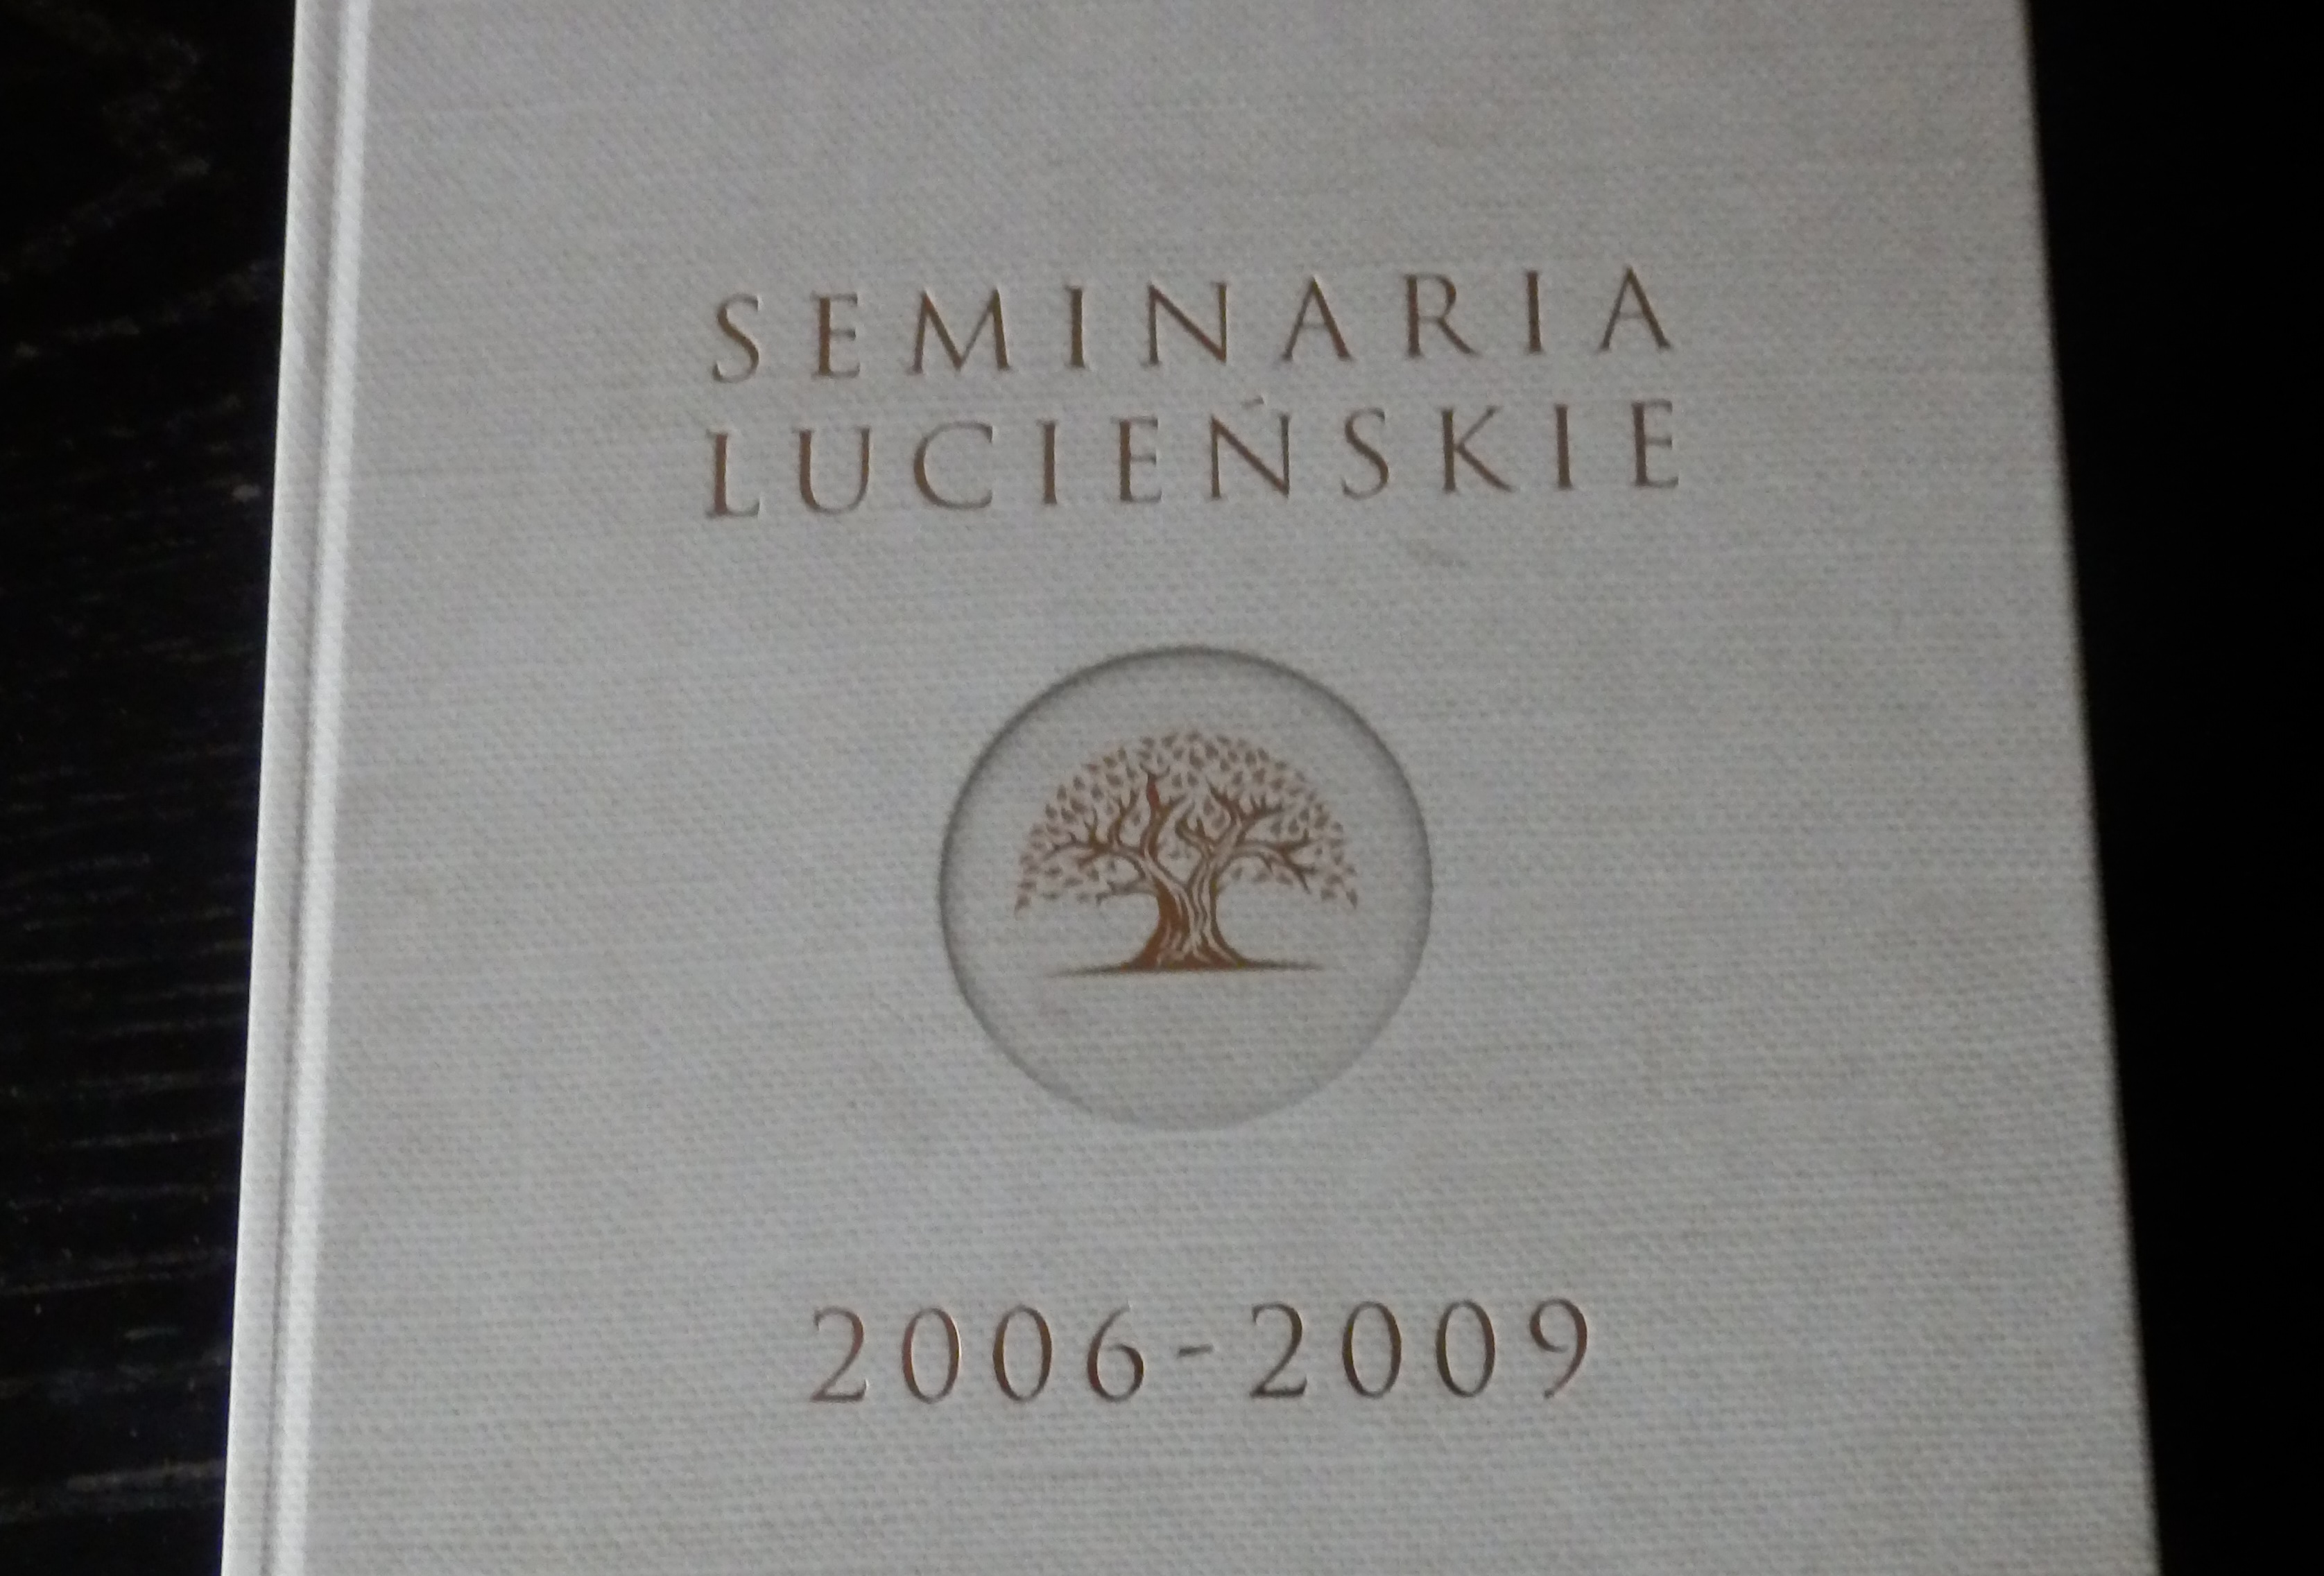 Seminaria lucieńskie - Maciej Mazurek